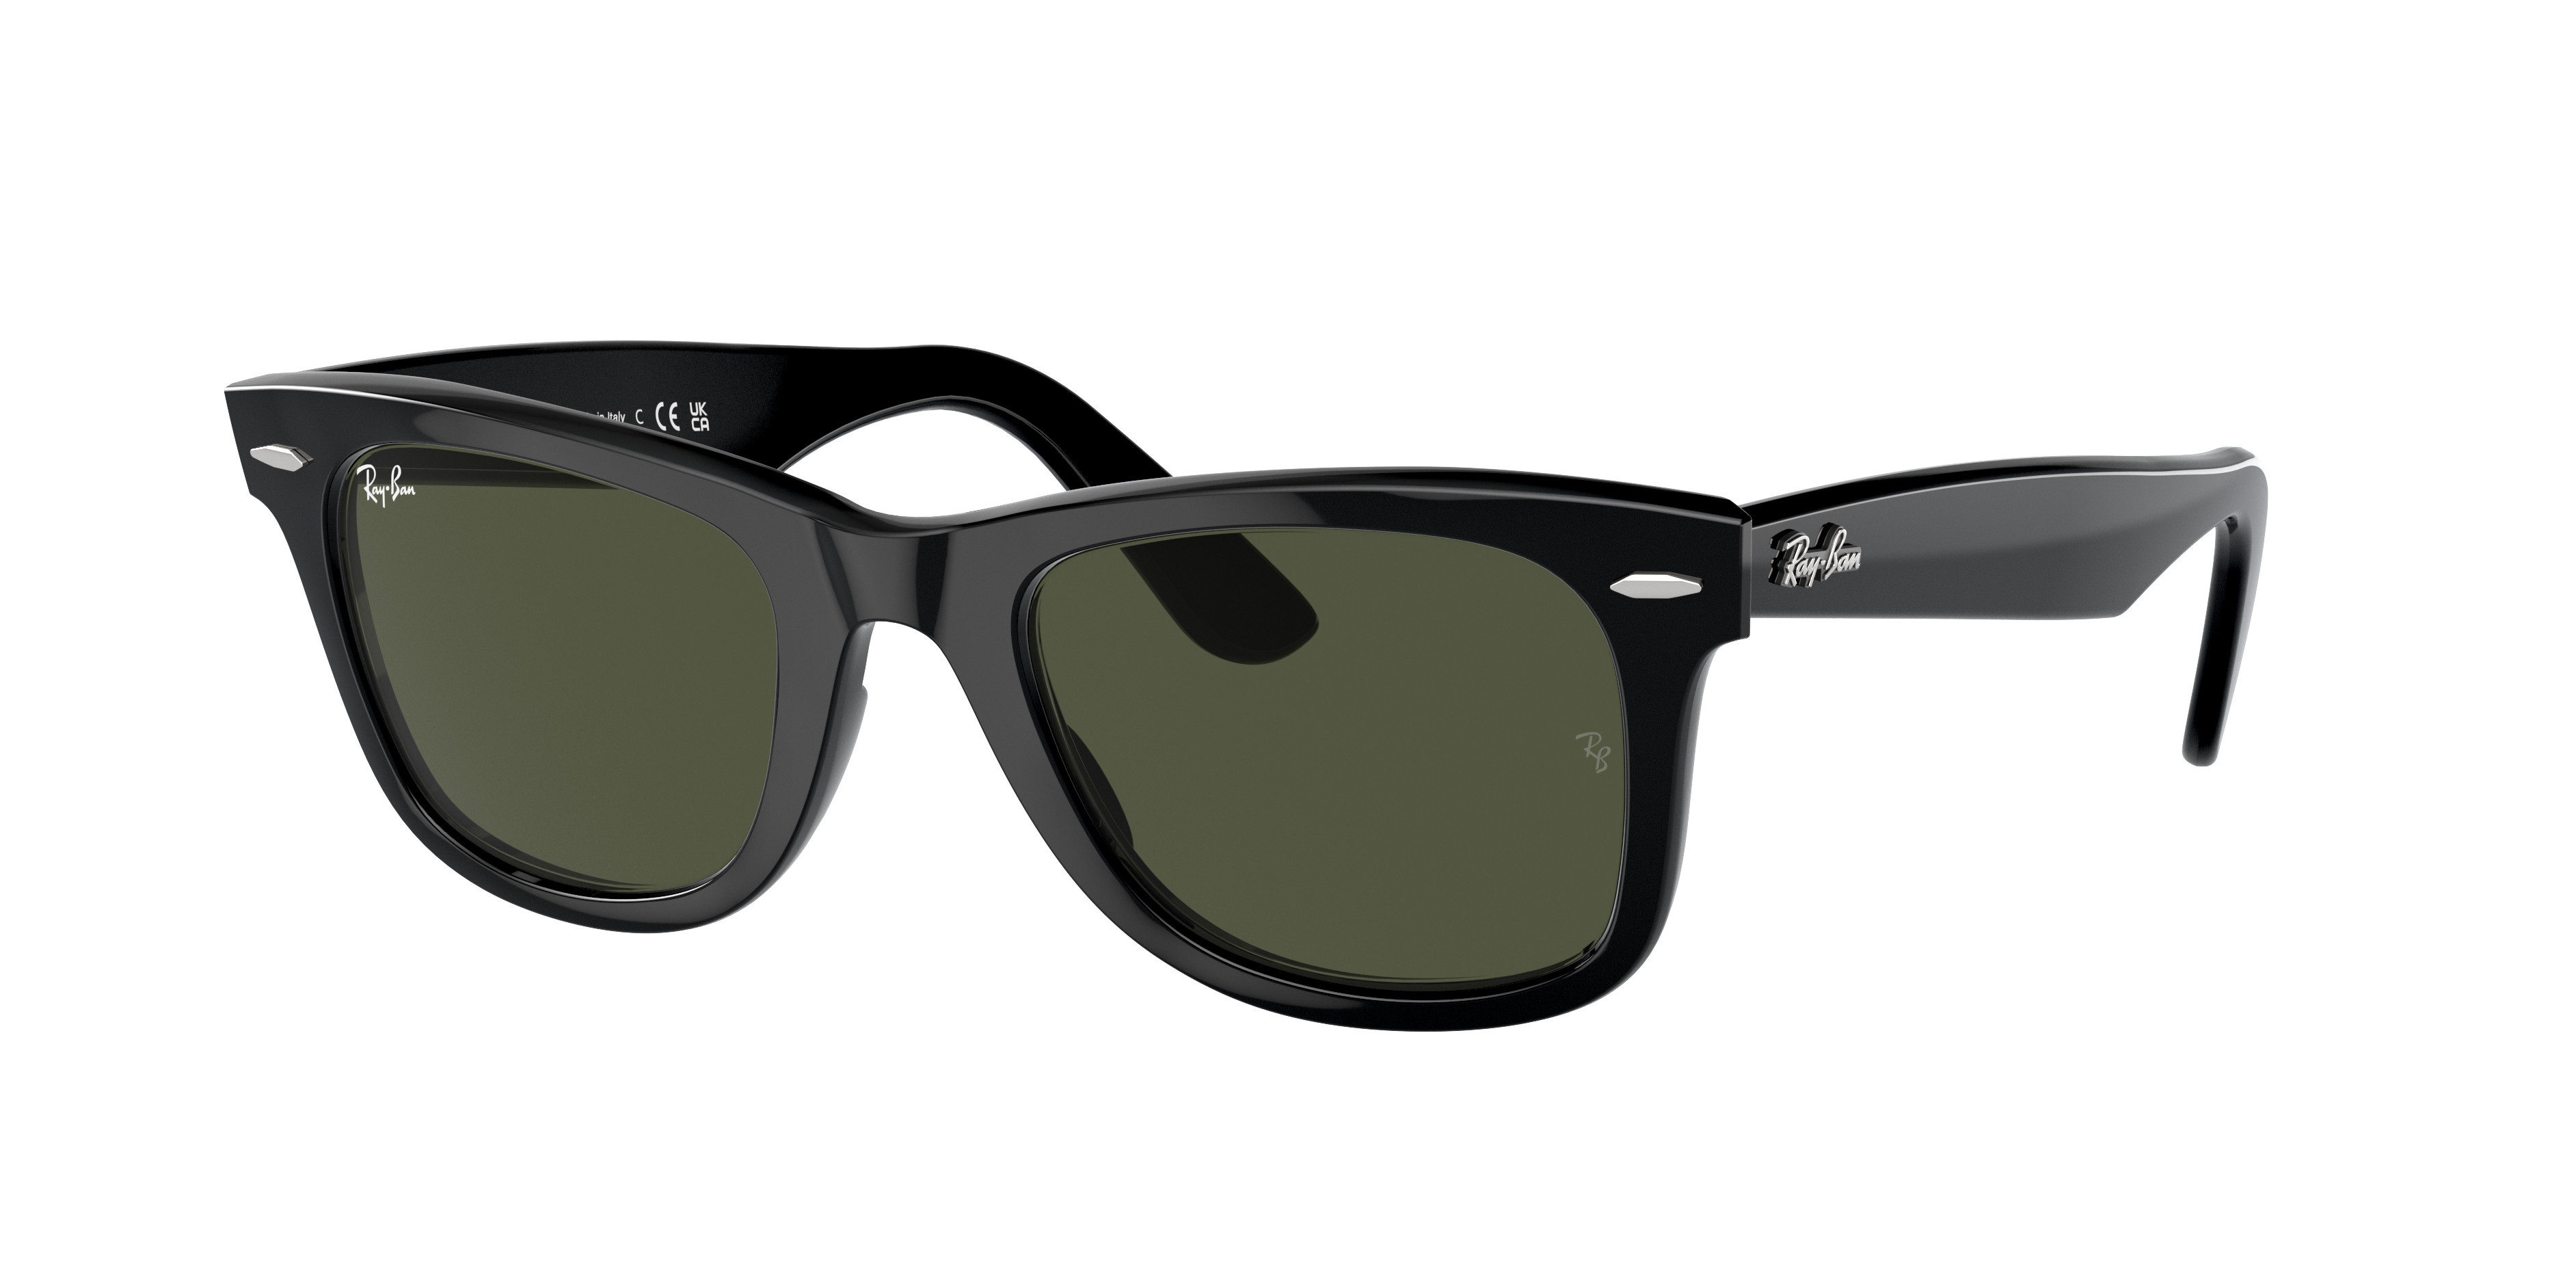 Clancy plast Drivkraft Original Wayfarer Classic Sunglasses in Black and Green - RB2140 | Ray-Ban®  US